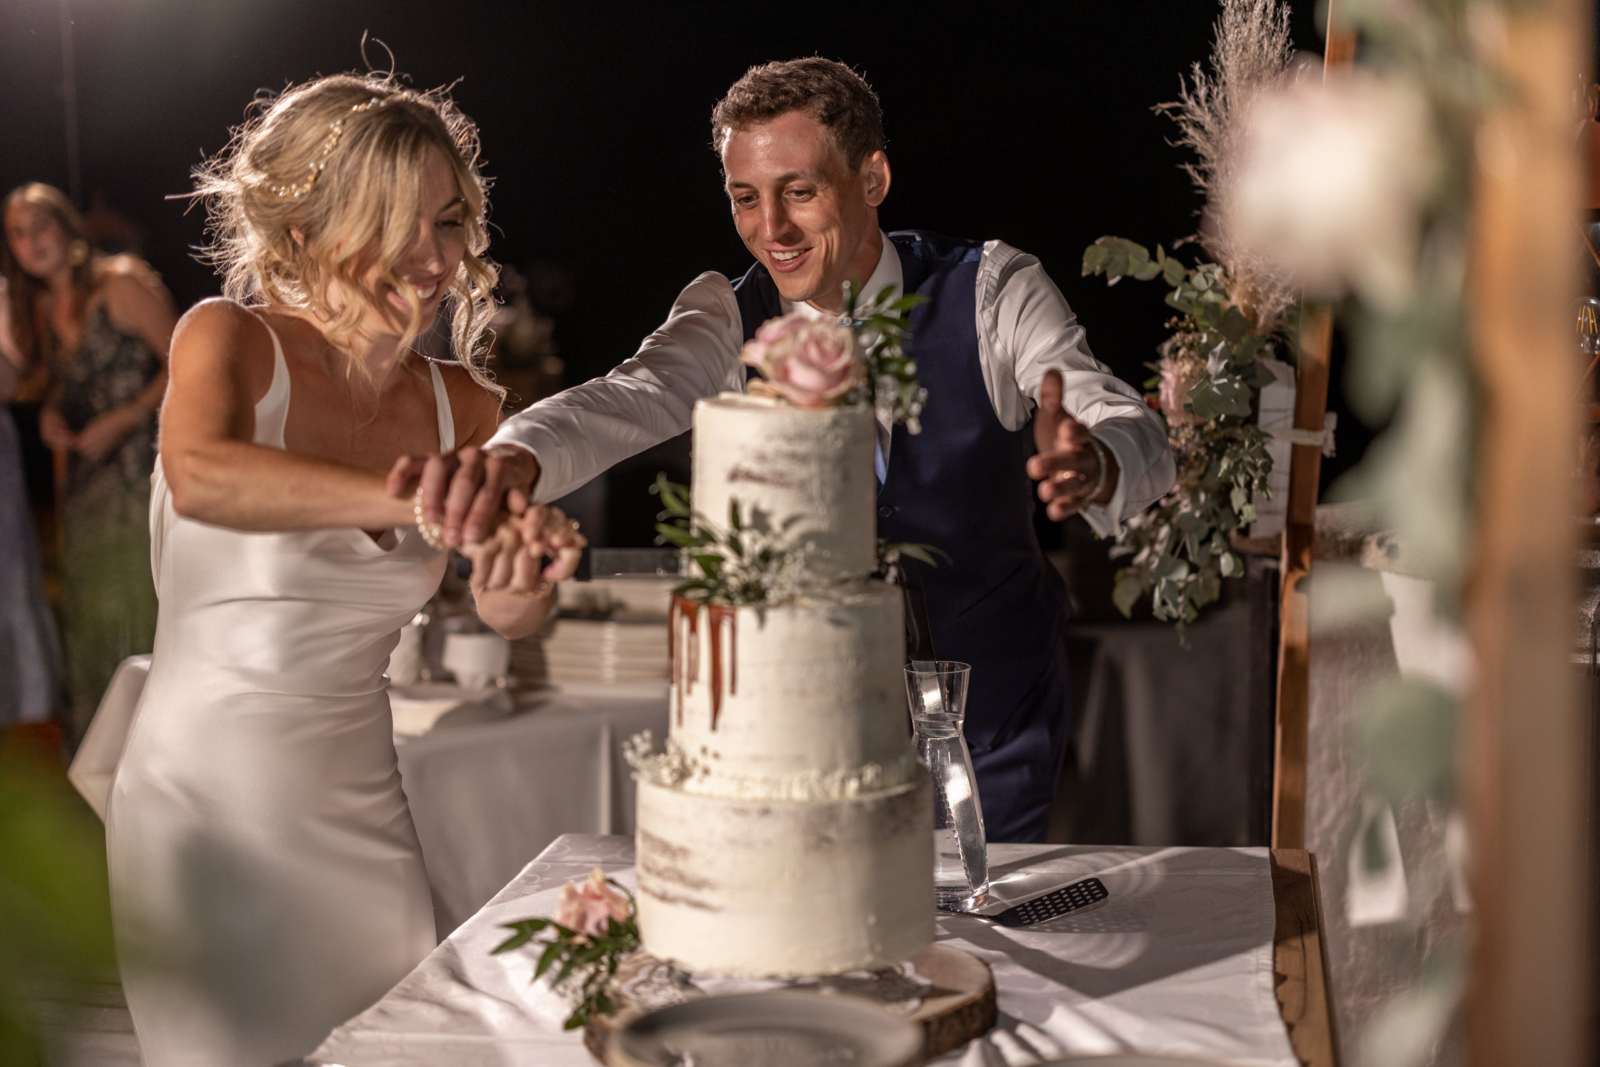 bridal couple is cutting the wedding cake